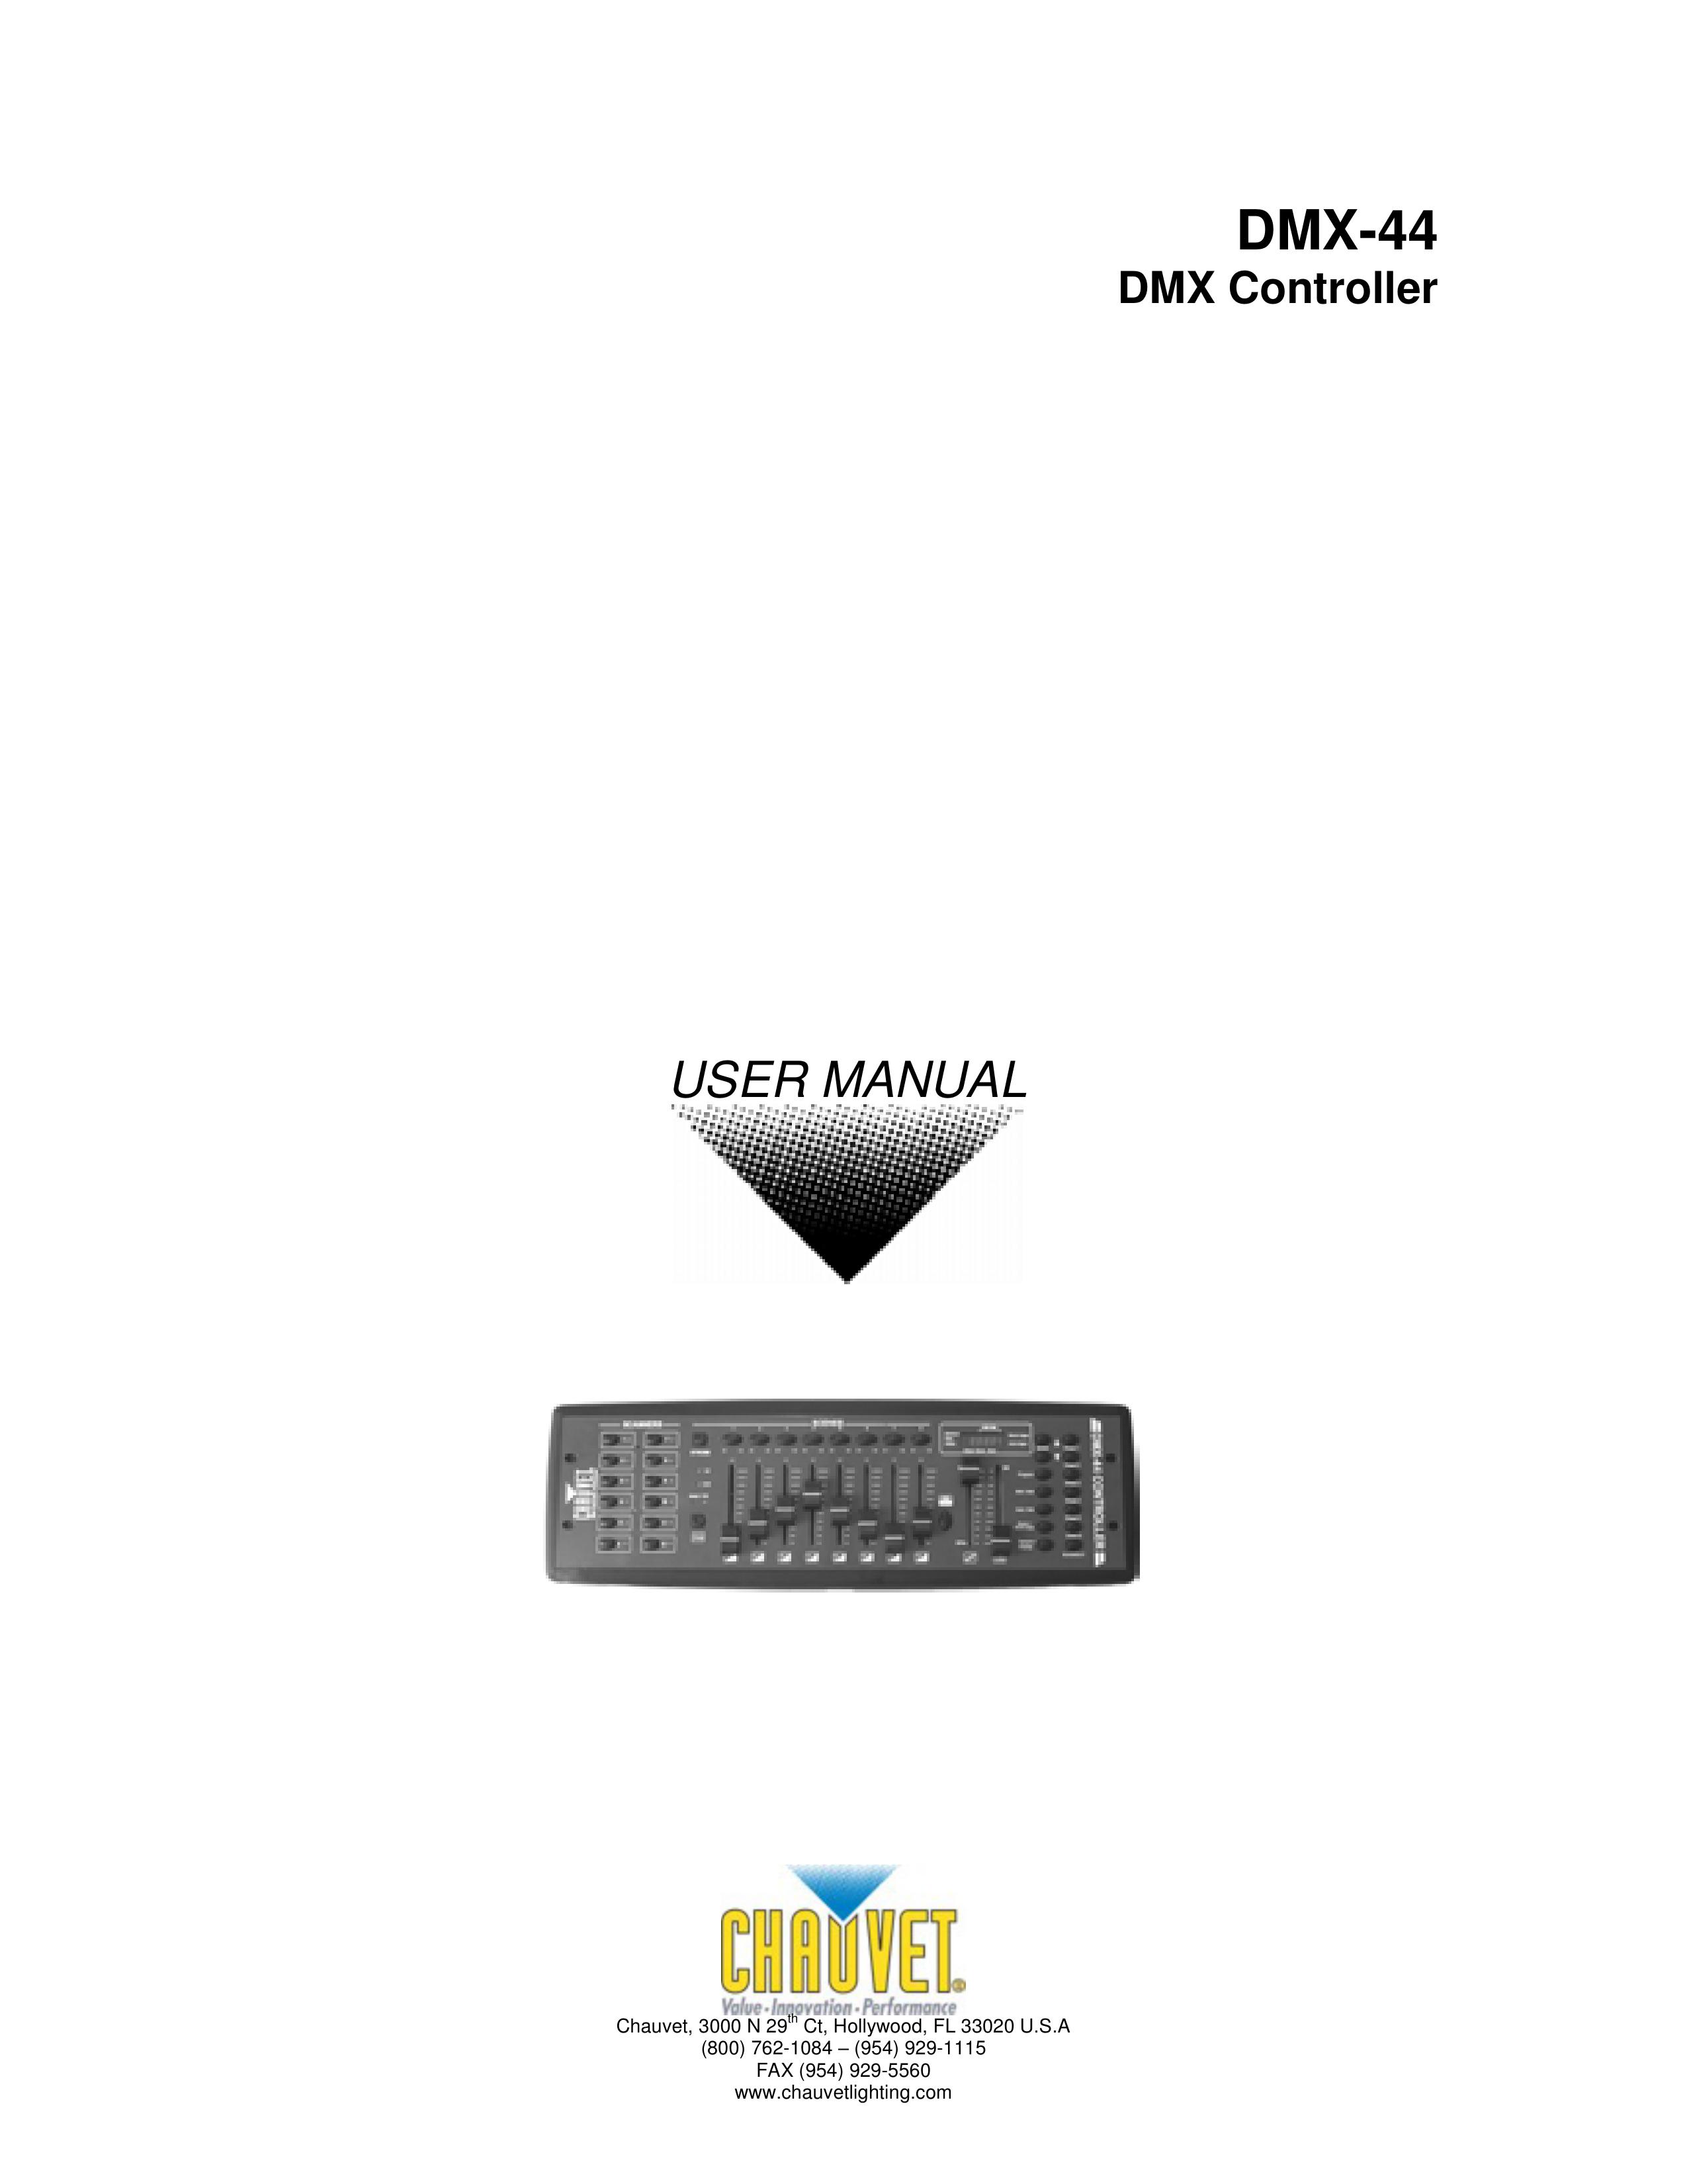 Chauvet DMX-44 Music Mixer User Manual